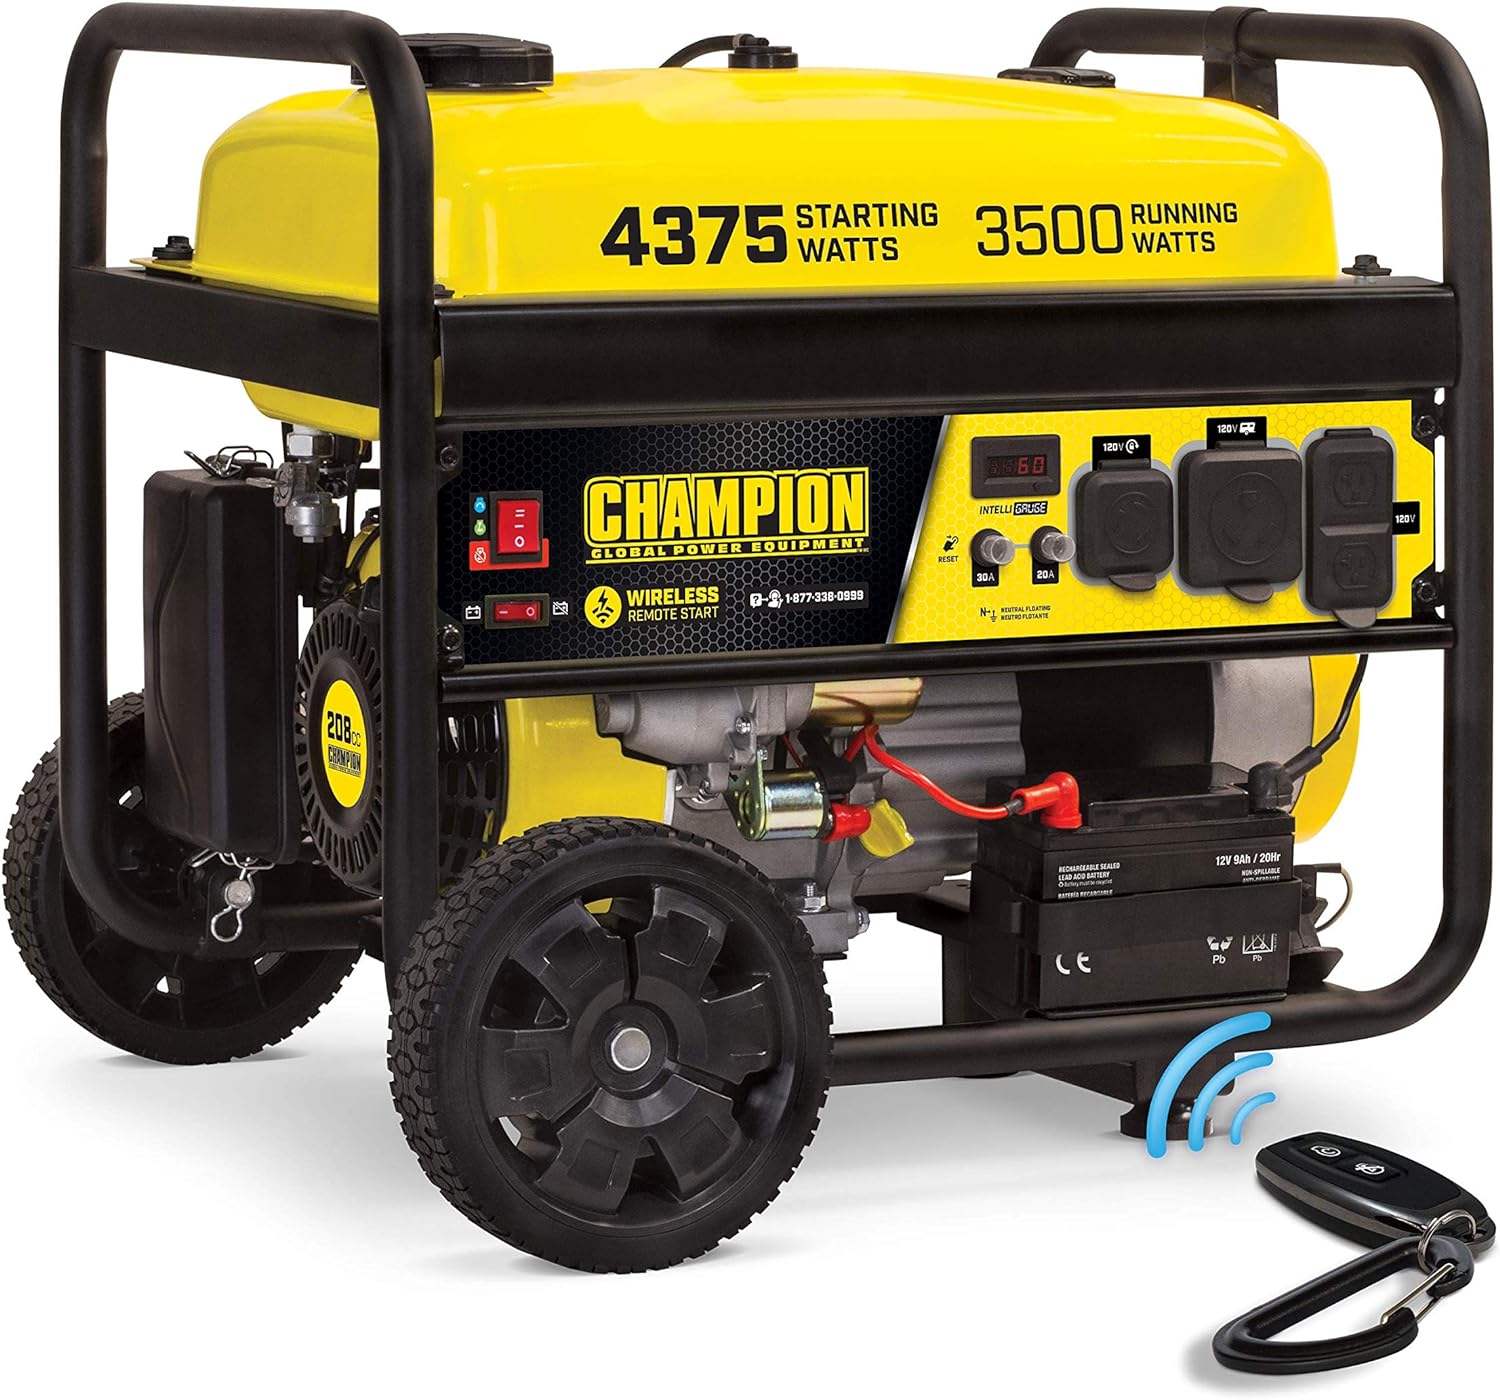 Champion Power Equipment 100554 Generator Review